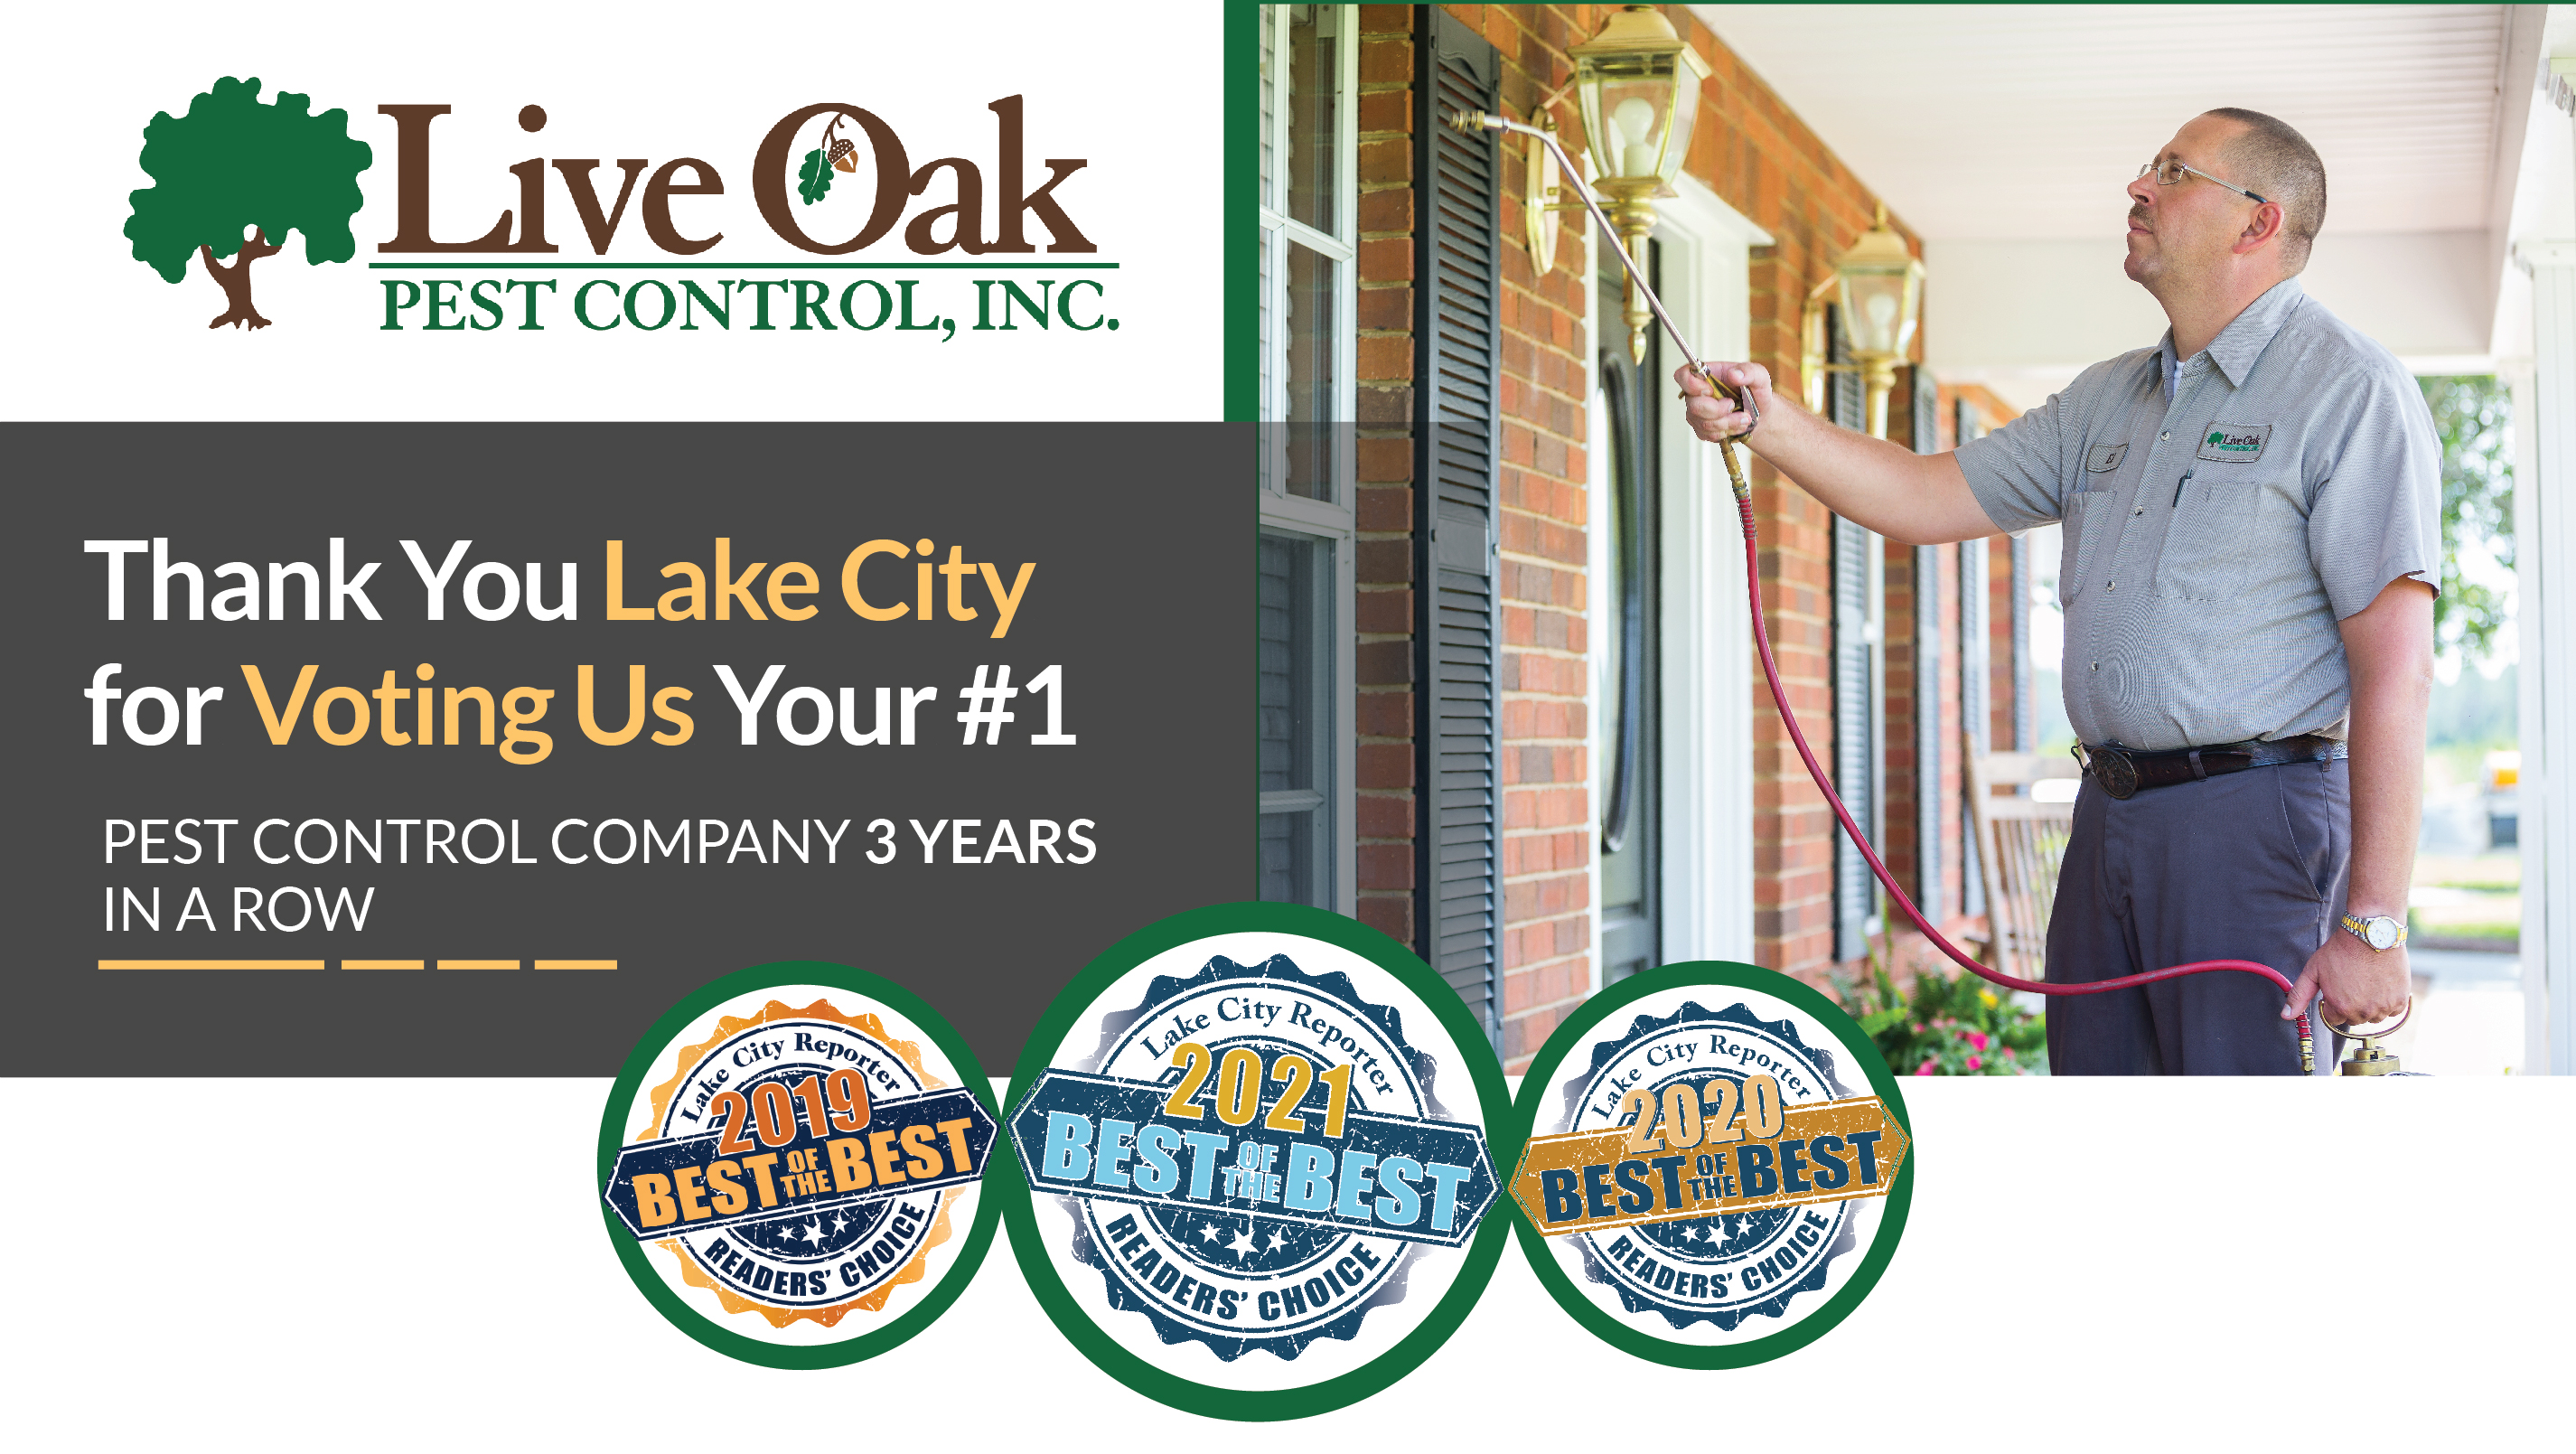 Live Oak Pest Control - Lake City Reporter Best of the Best in Pest Control Service 2021 Winner